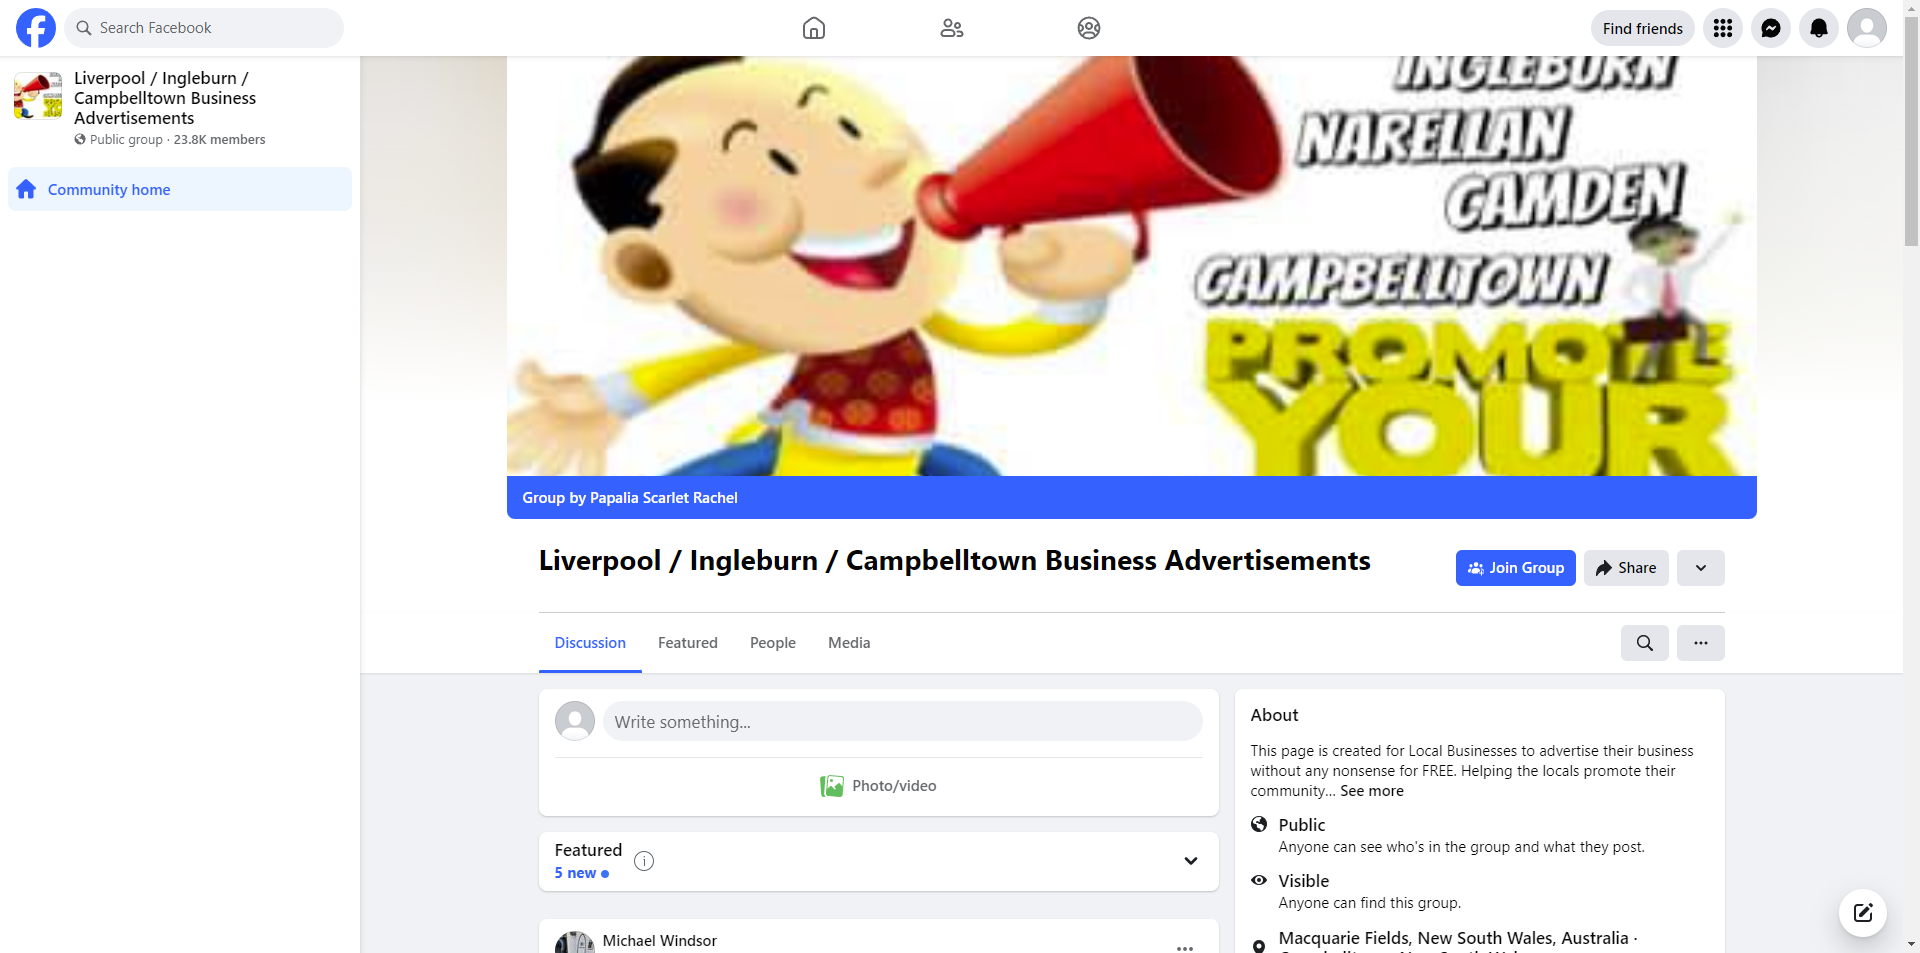 Liverpool/Ingleburn/Campbelltown Business Advertisements